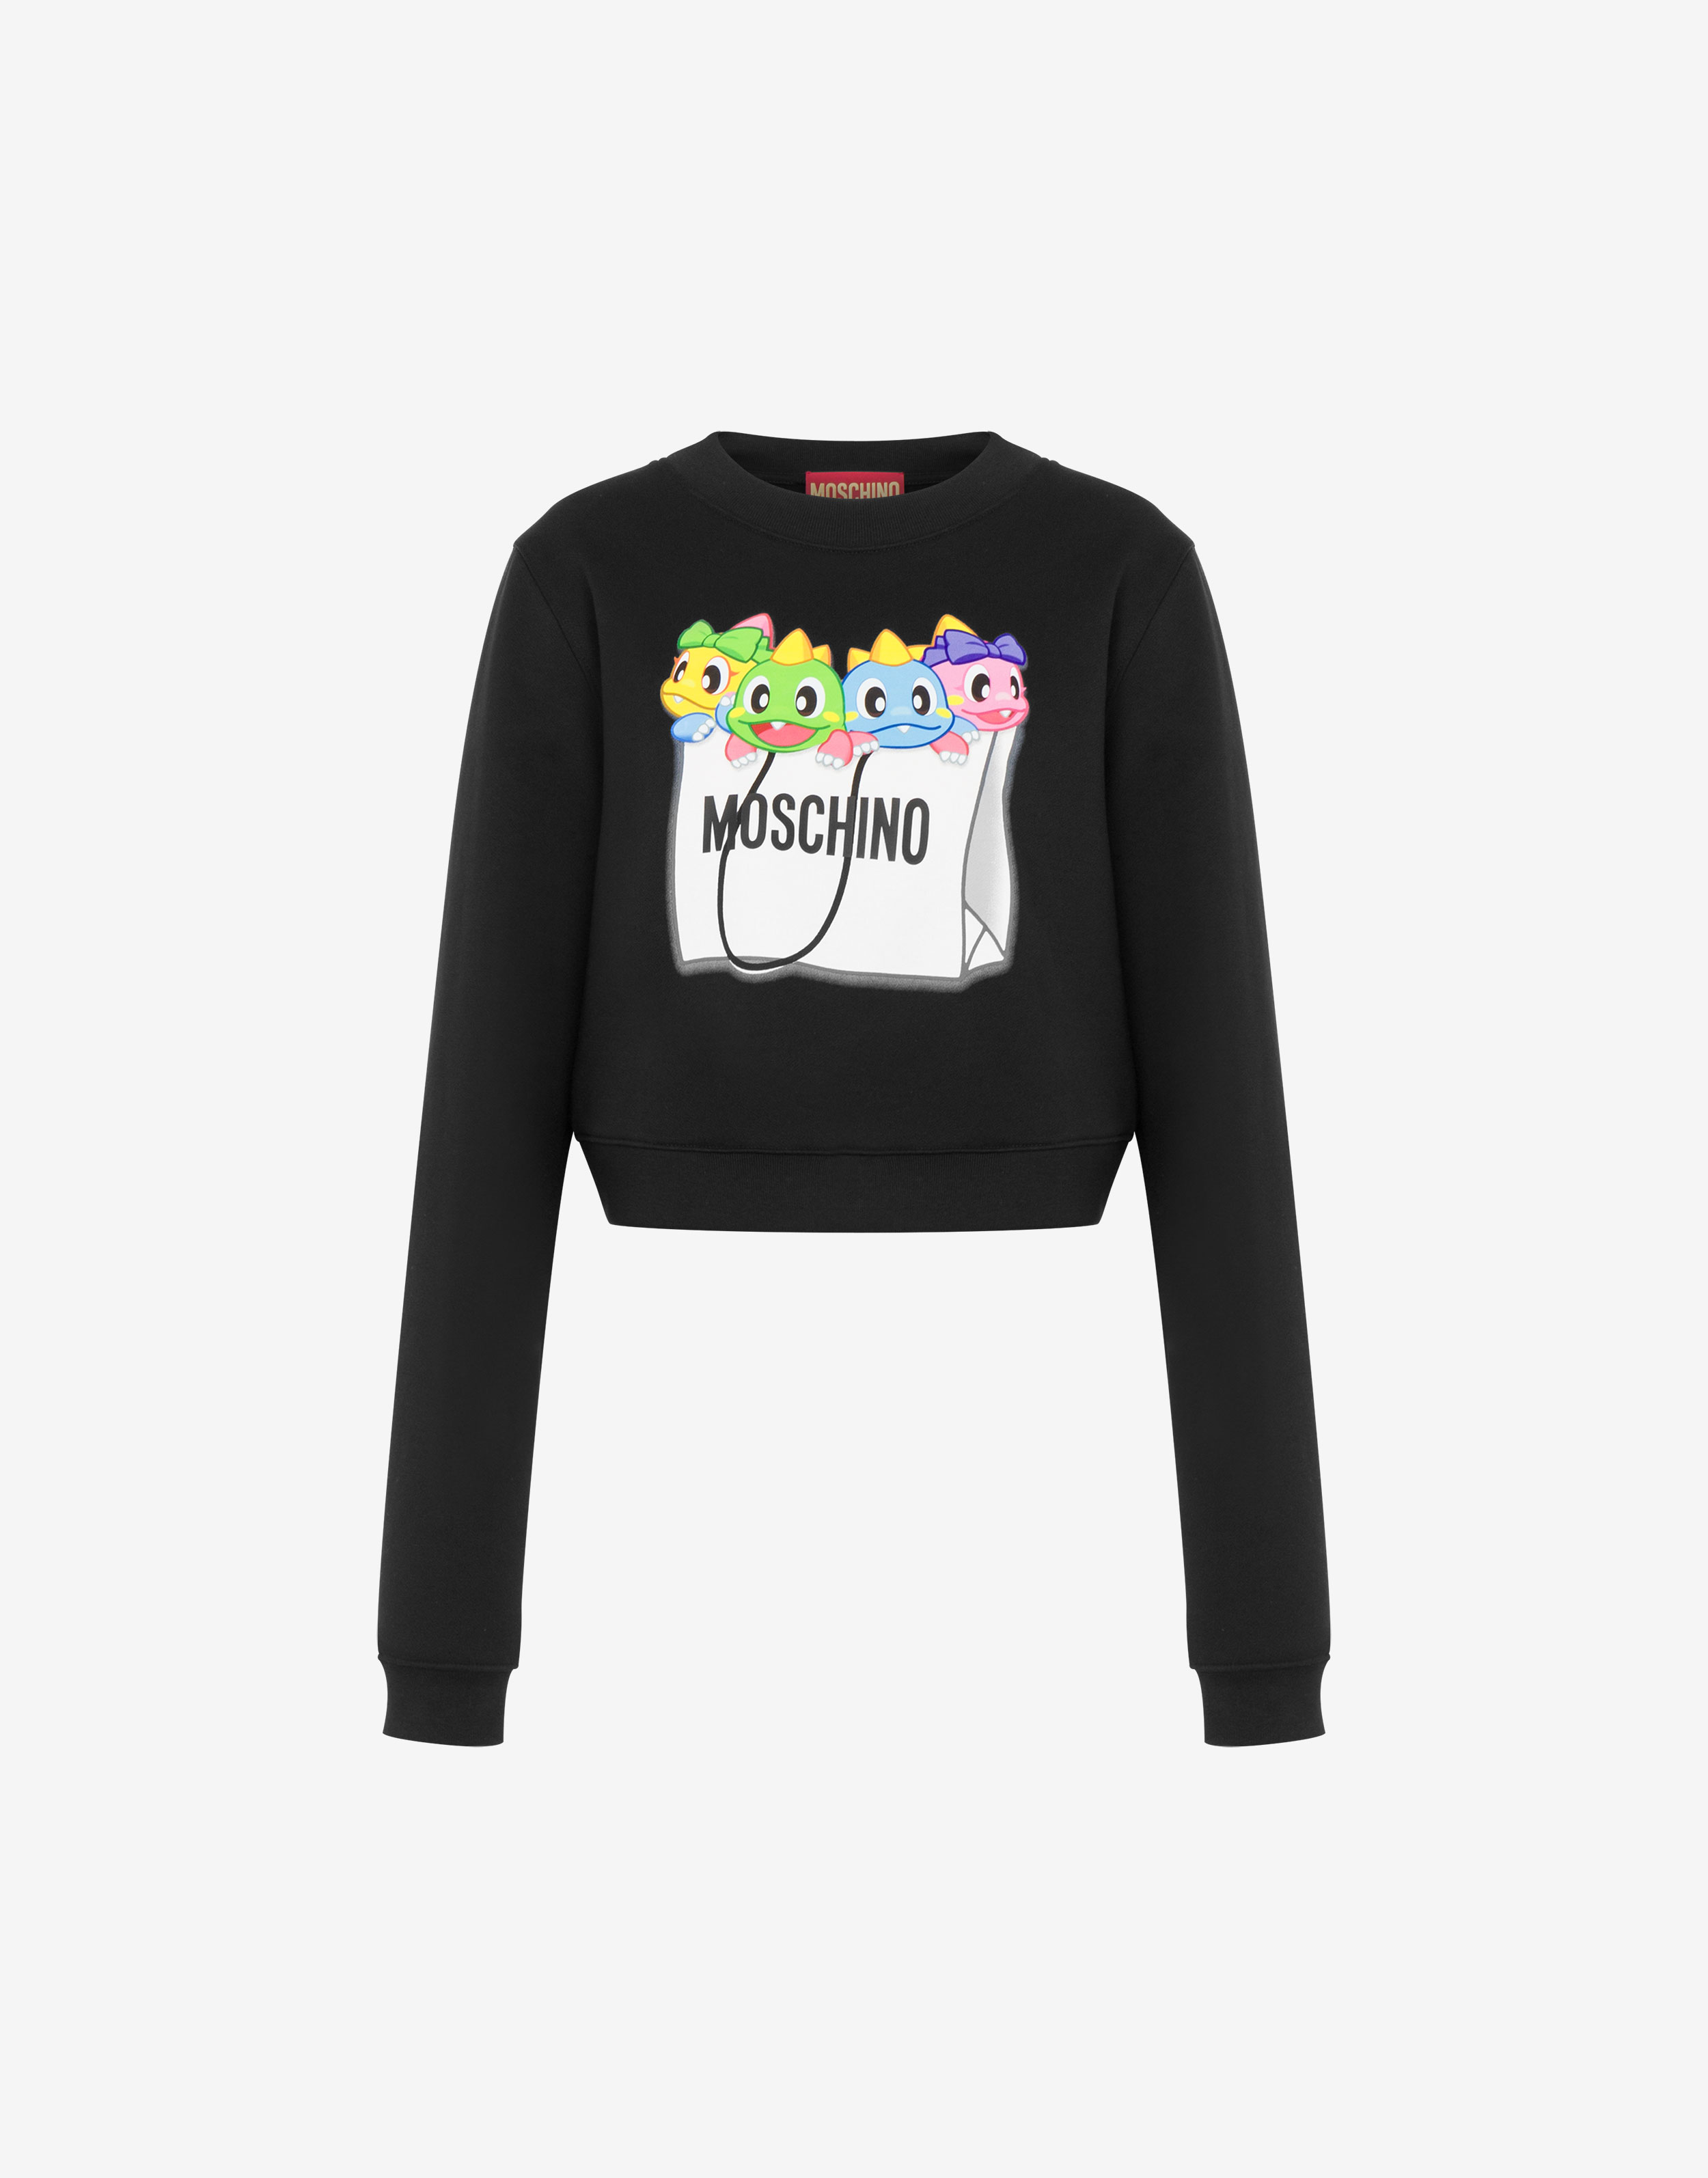 Moschino Women's Sweatshirts - Official Store USA